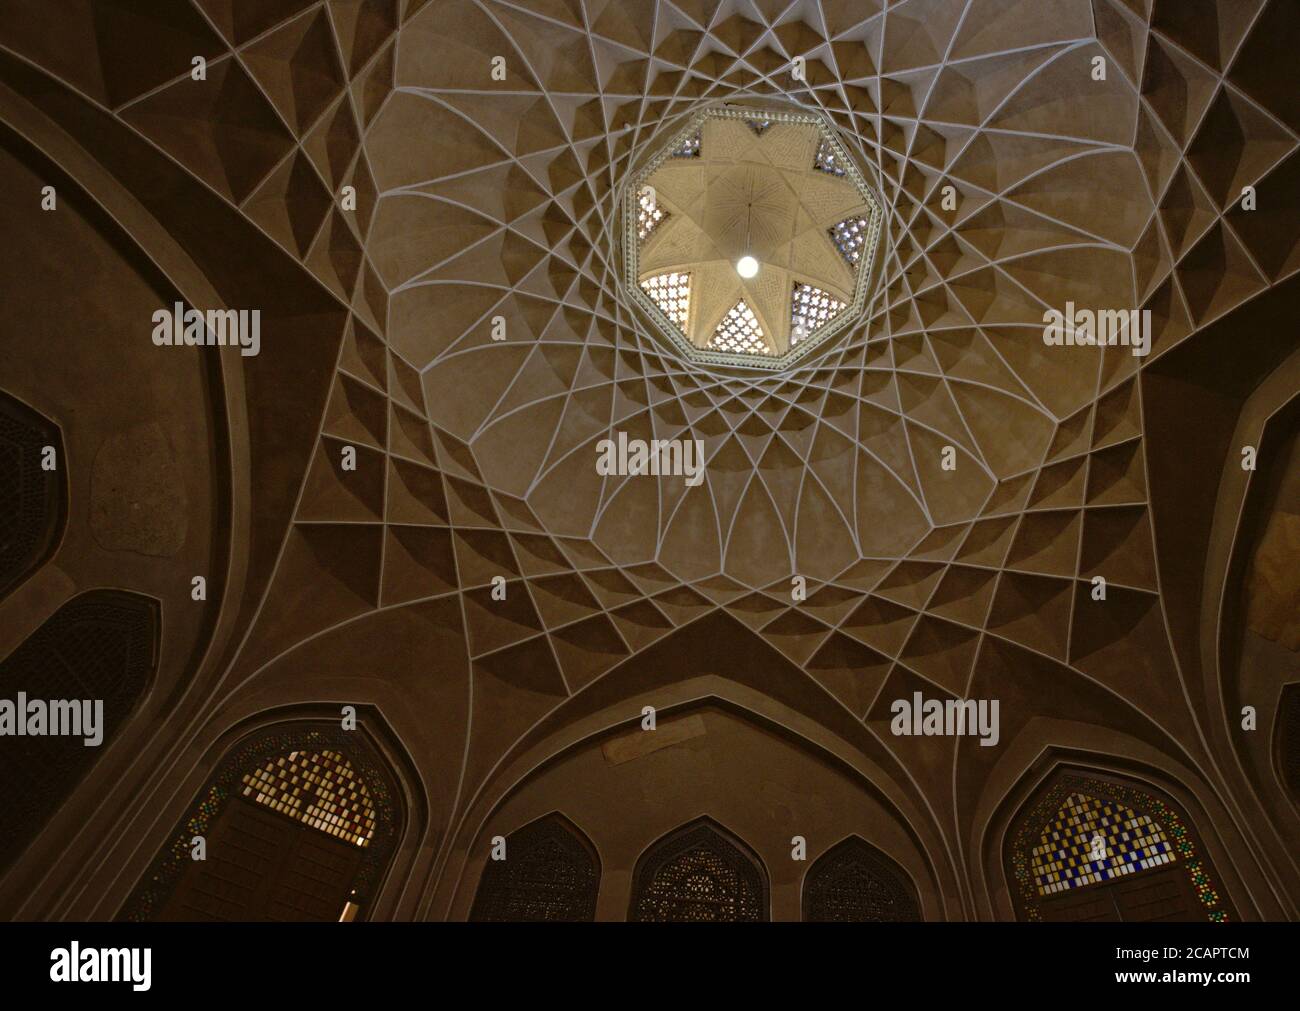 Ceiling inside summer pavilion of landmark Persian garden in Yazd, Iran Stock Photo